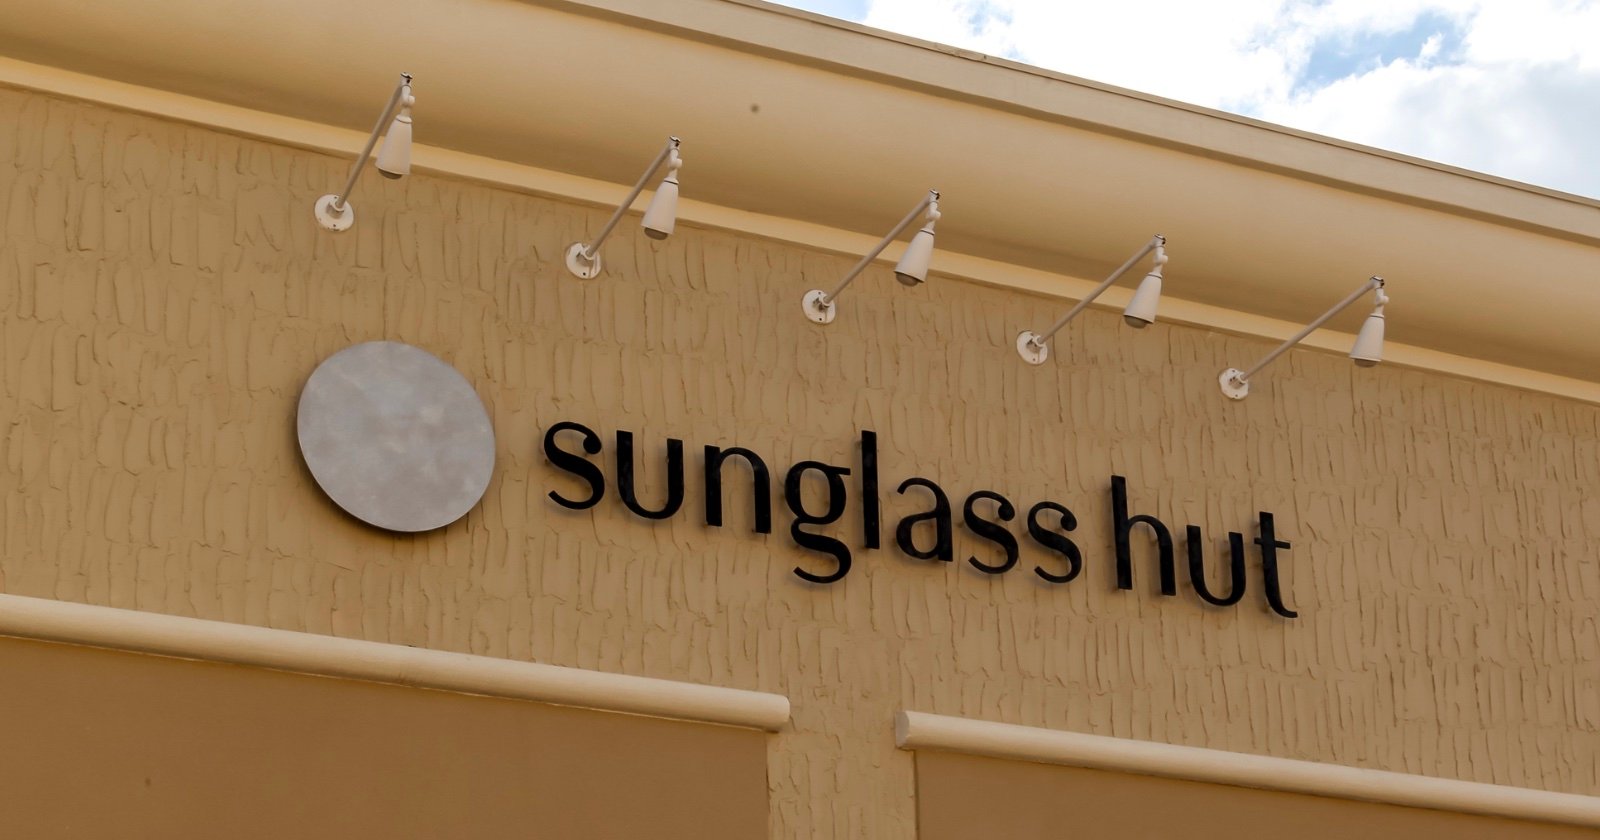 Grandfather Sues Sunglass Hut After Facial Recognition Led to False Arrest